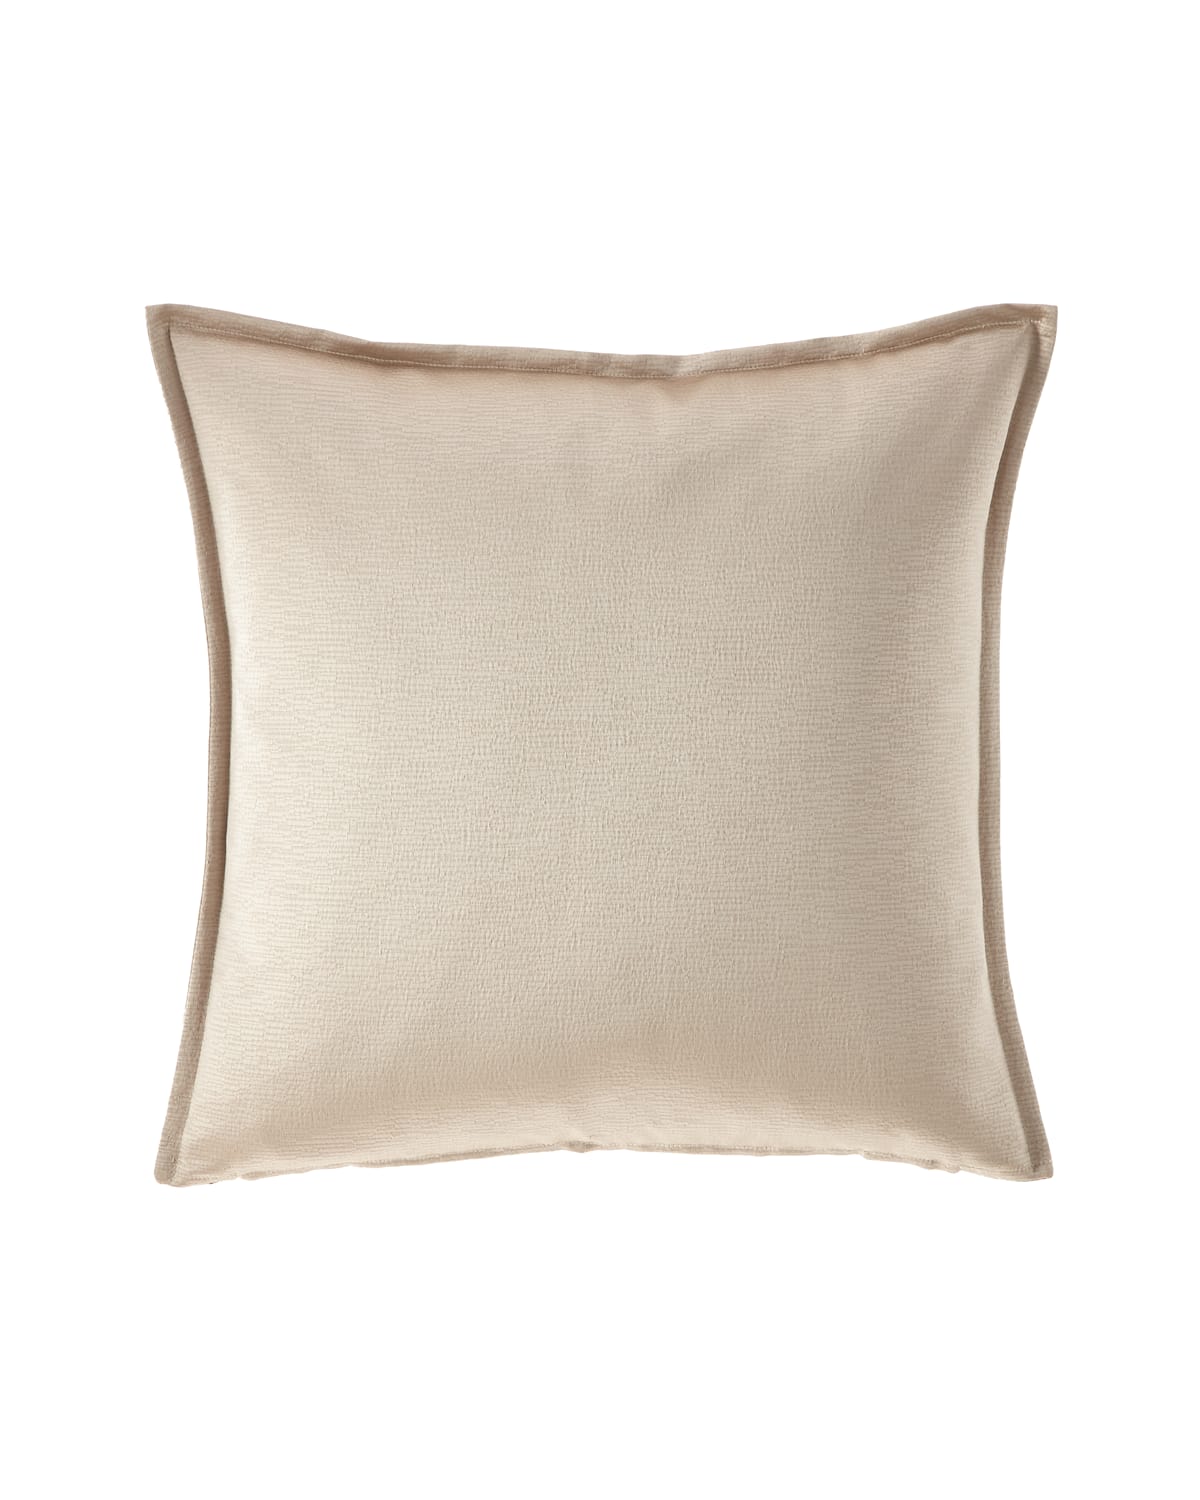 Image Fino Lino Linen & Lace Nacre Throw Pillow